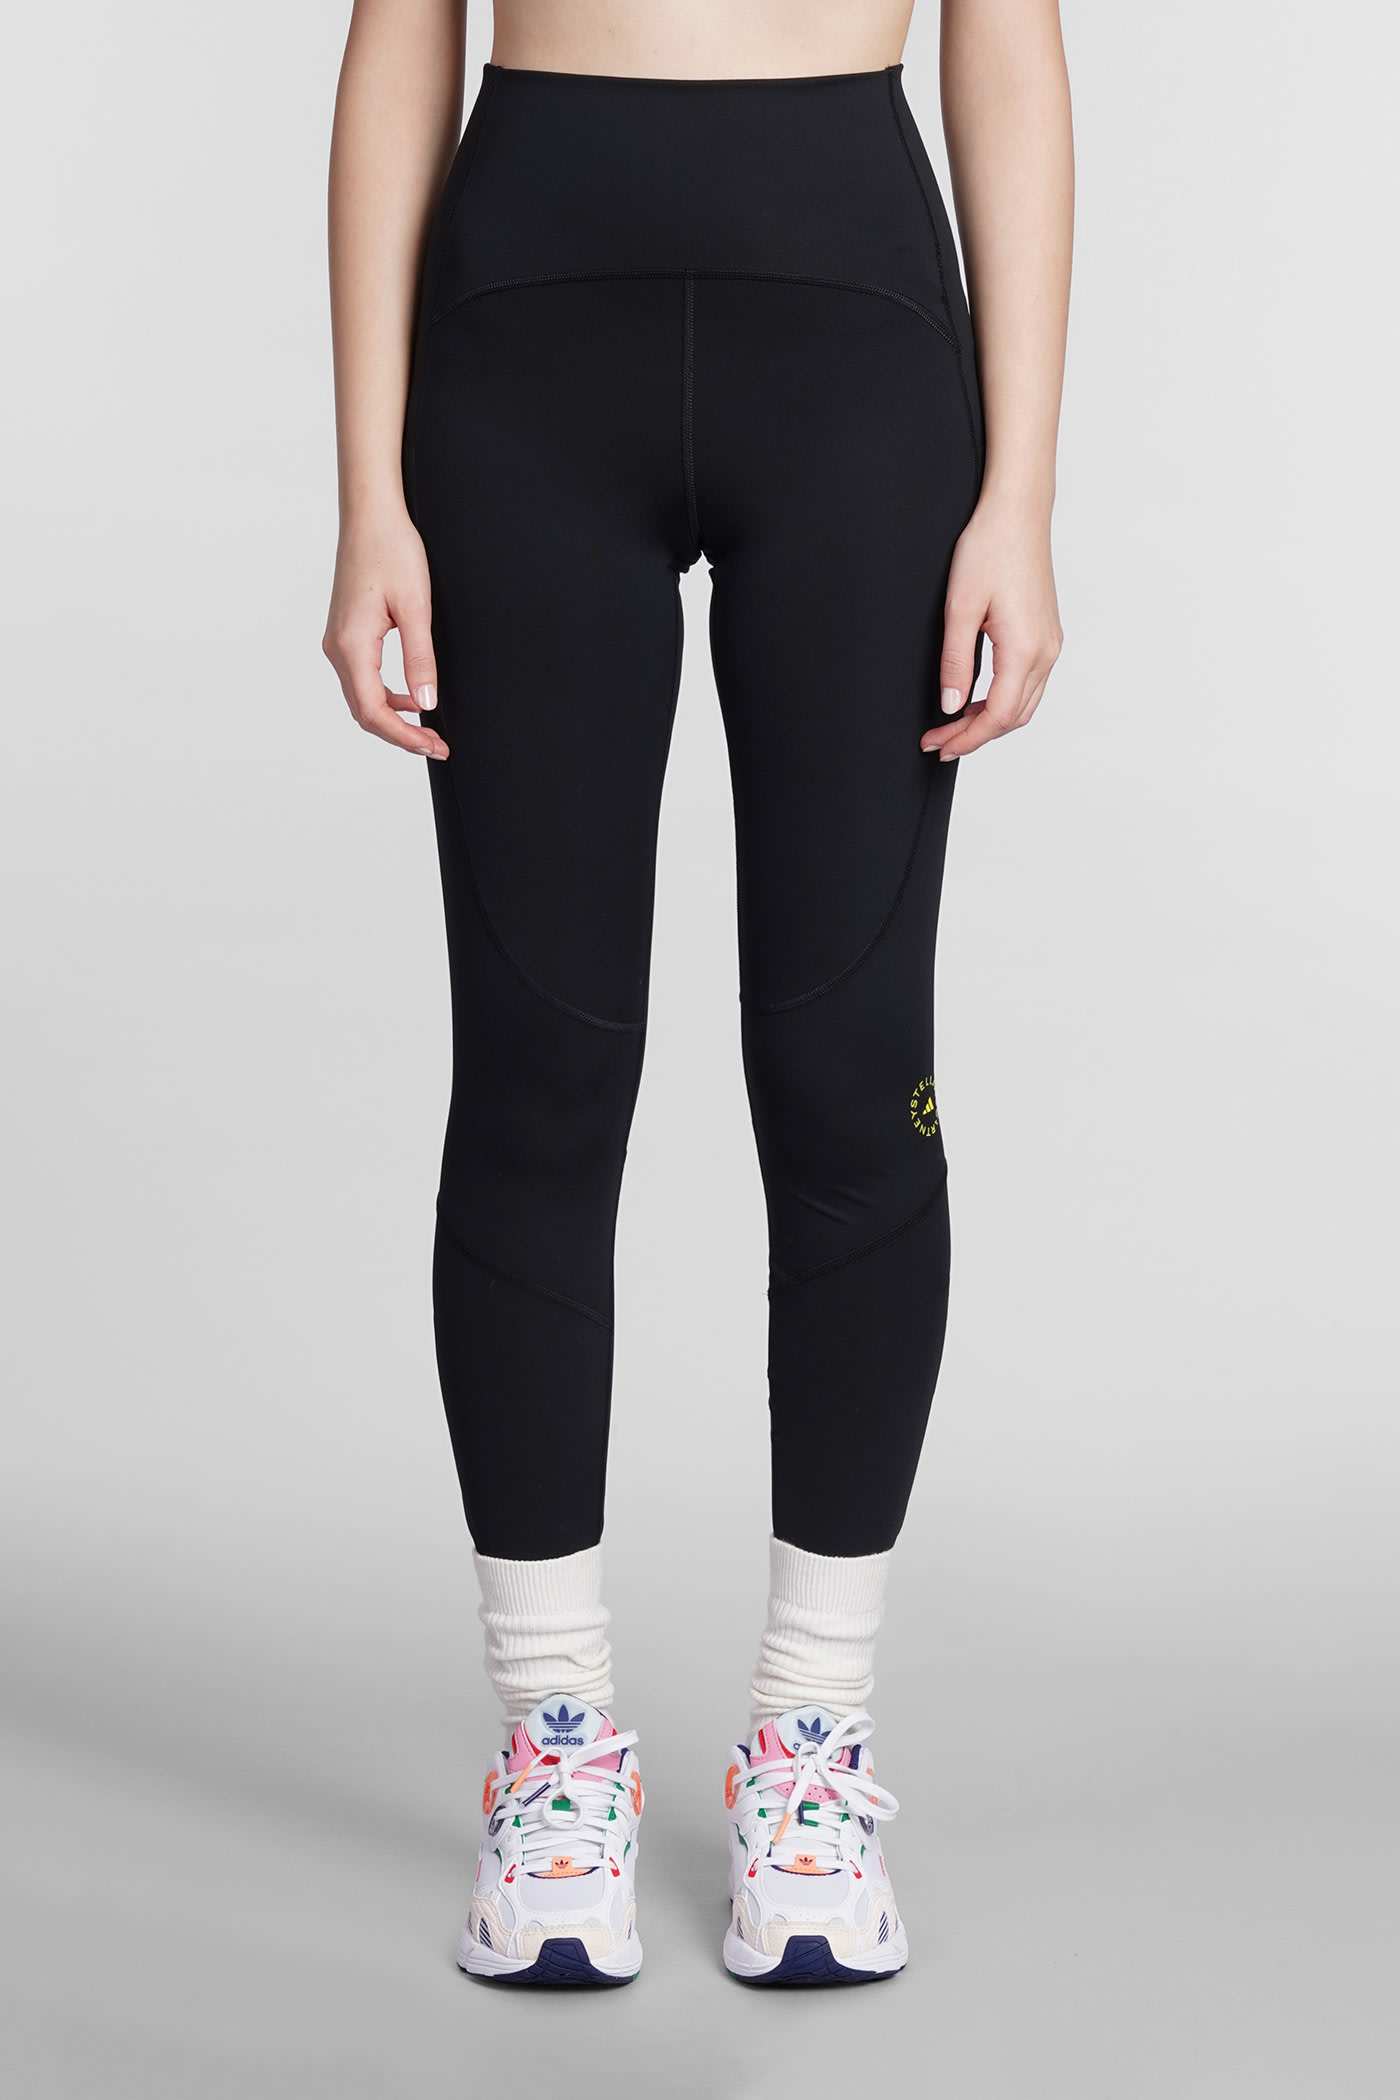 Adidas by Stella McCartney Leggings In Black Polyester